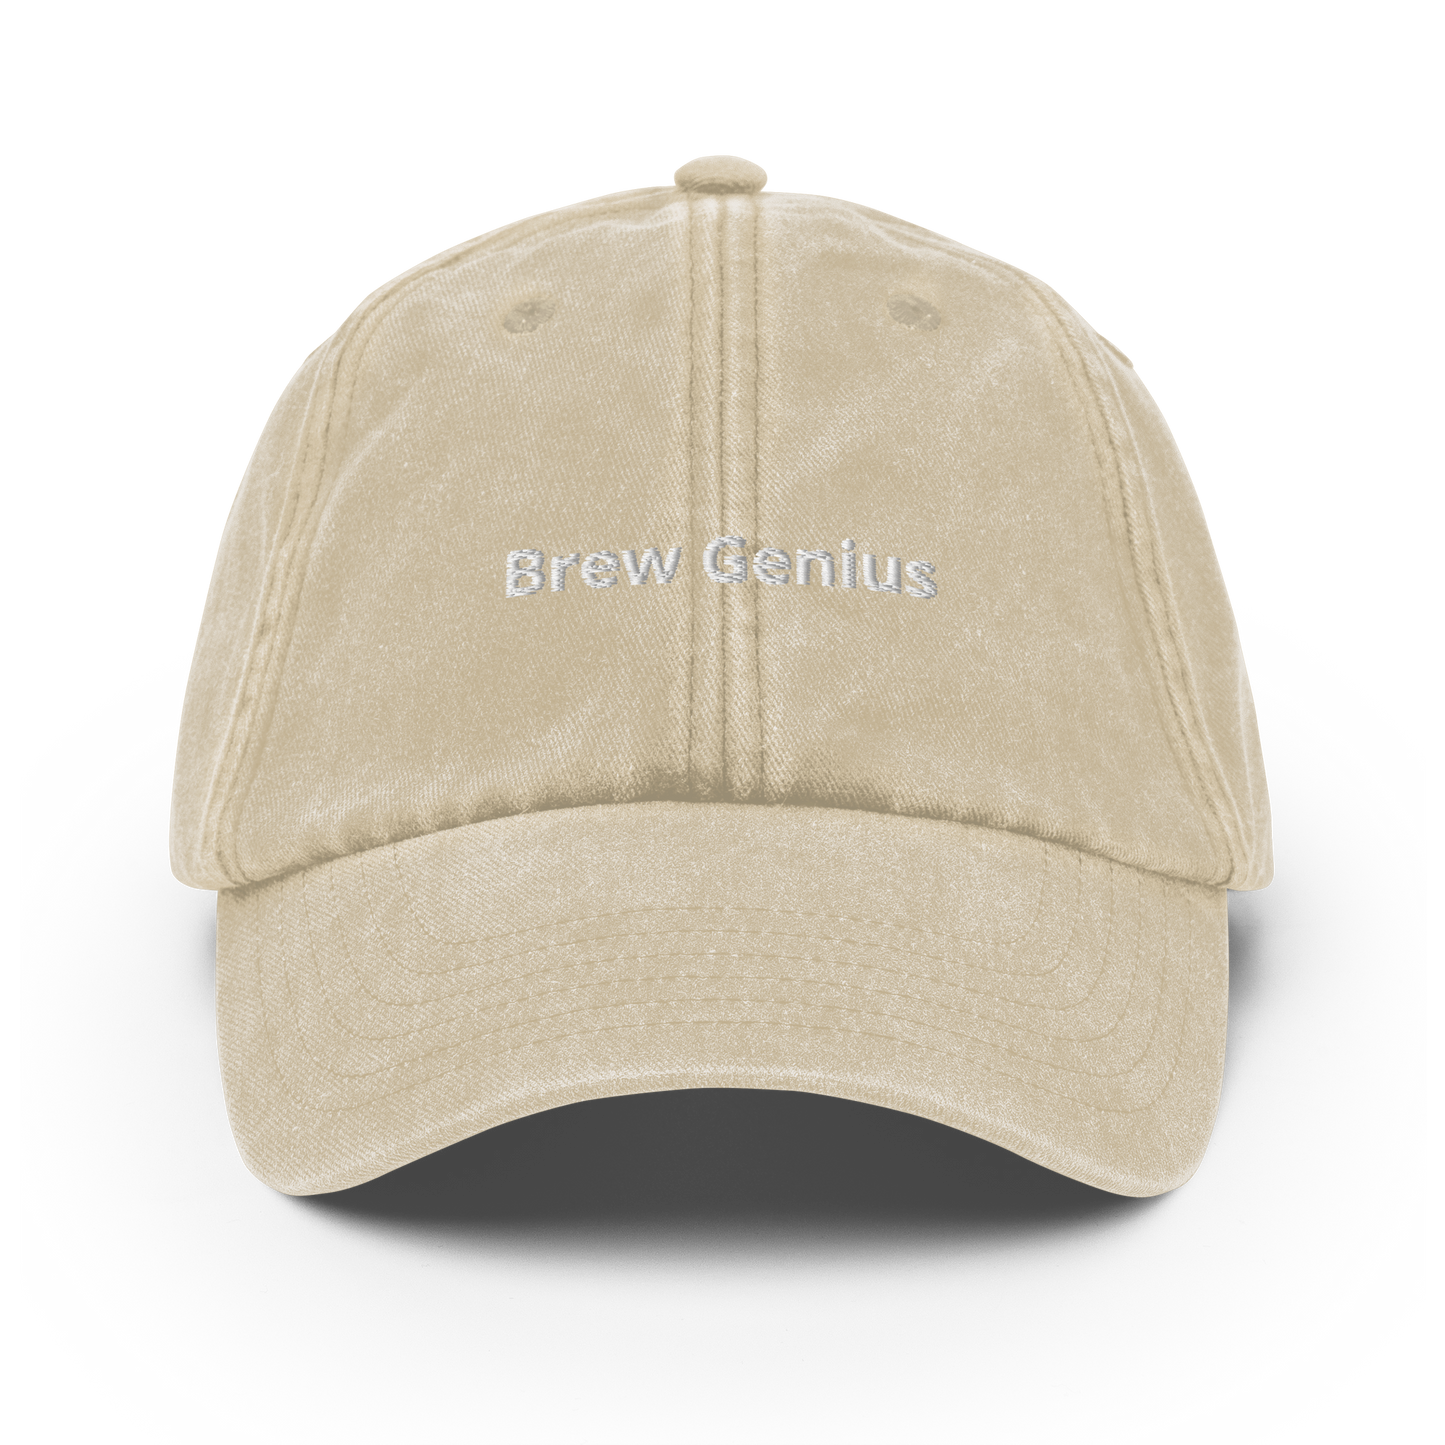 Brew Genius - Vintage Hat